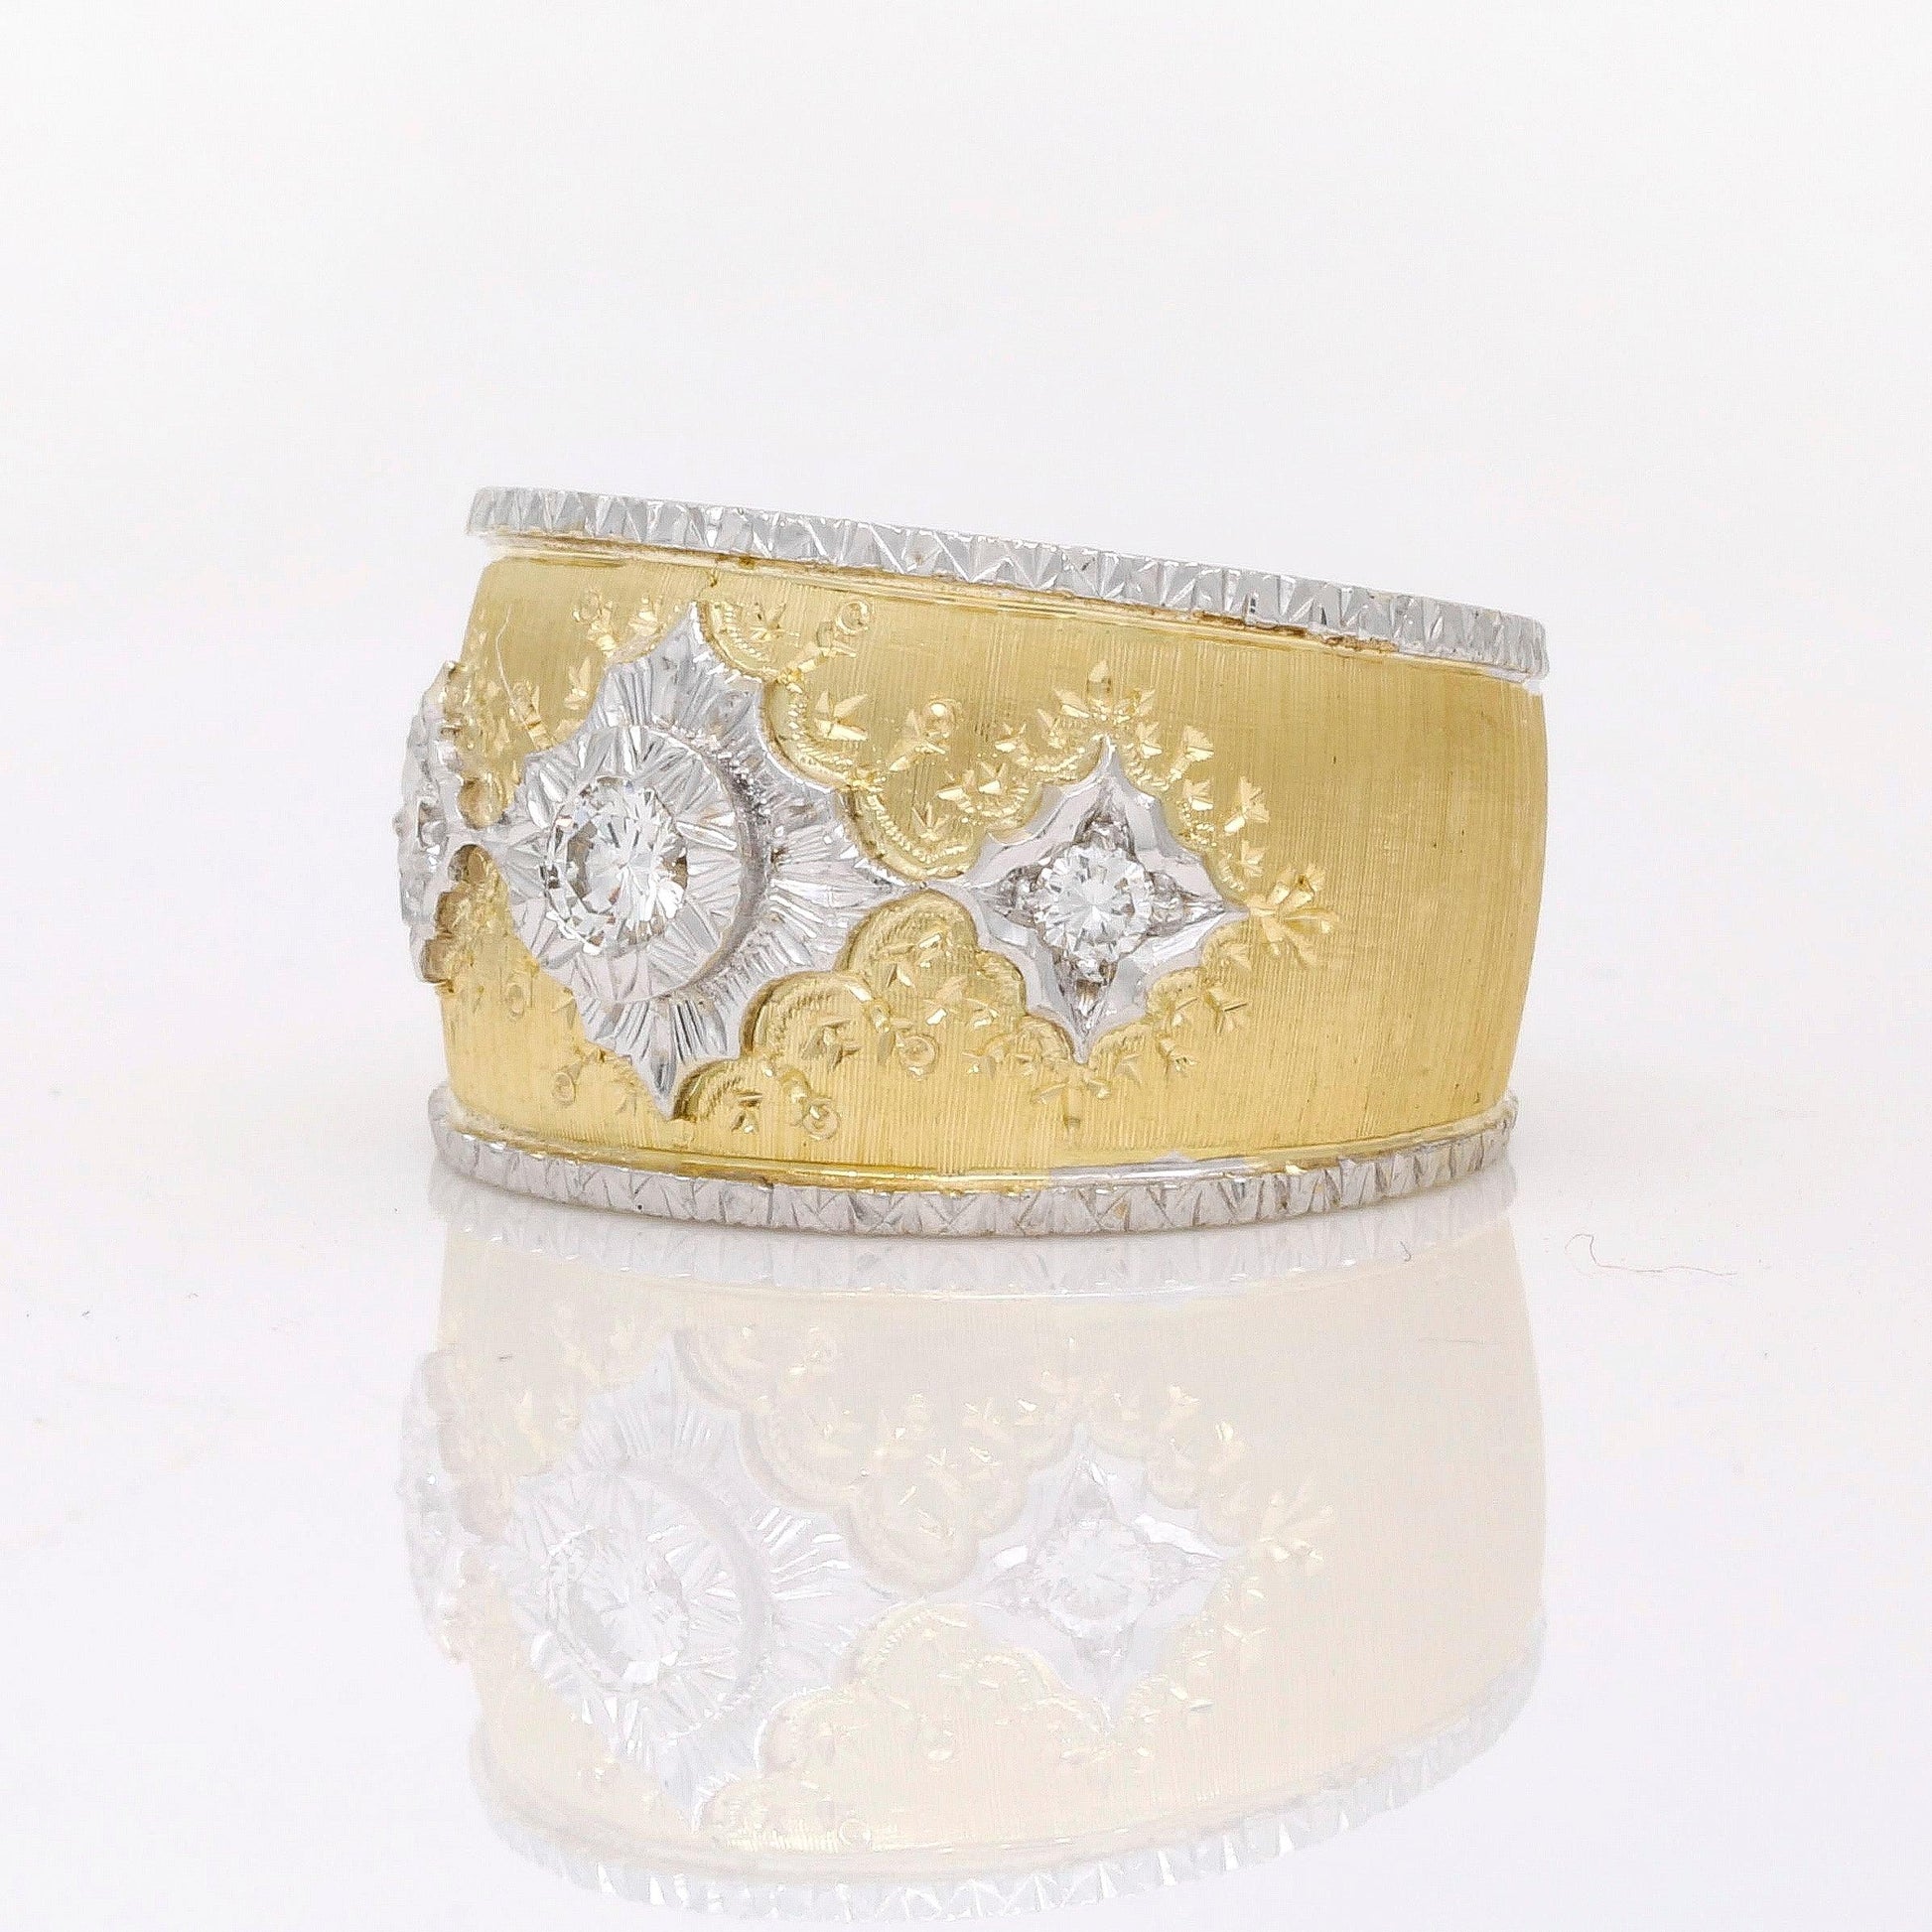 Italian Diamond Florentine Finish Dome Statement Ring in 18k Yellow Gold - 31 Jewels Inc.